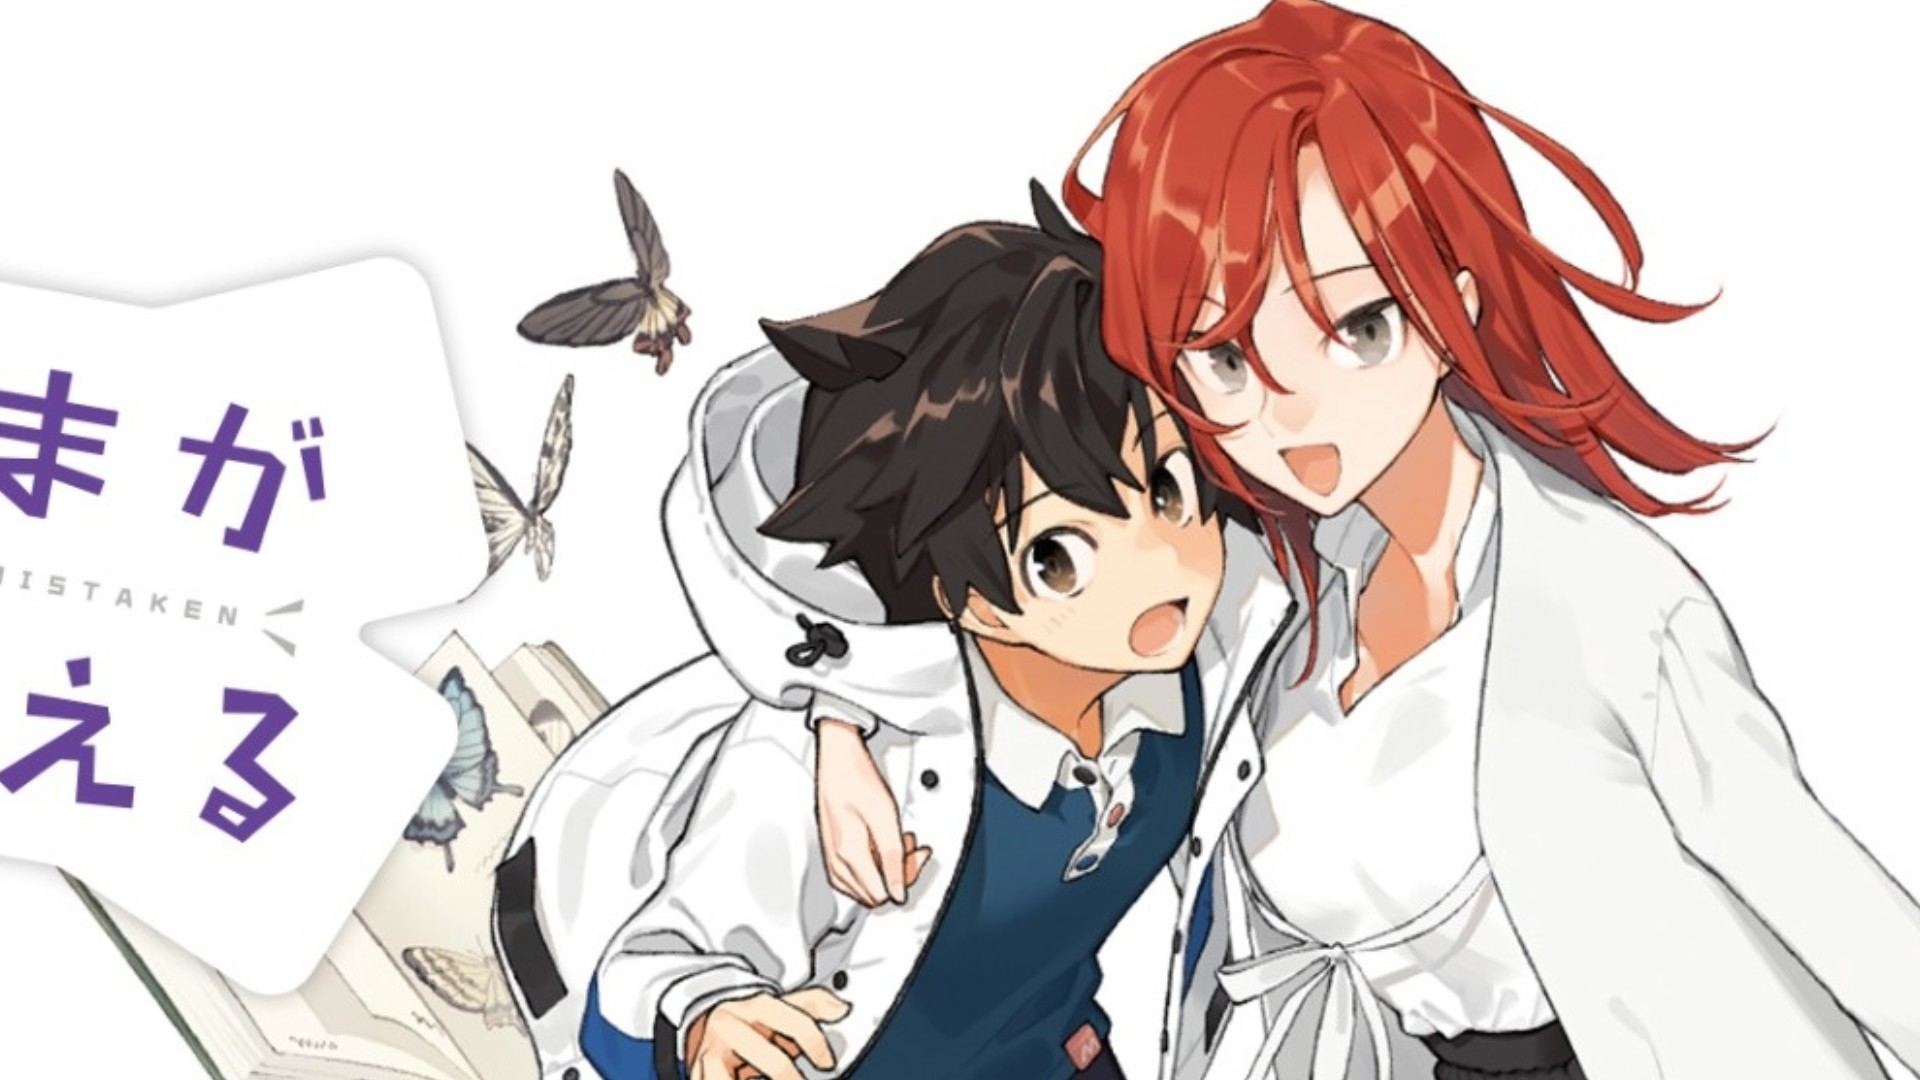 Bloom Into You Yuri Manga Gets Side Story Novel - News - Anime News Network